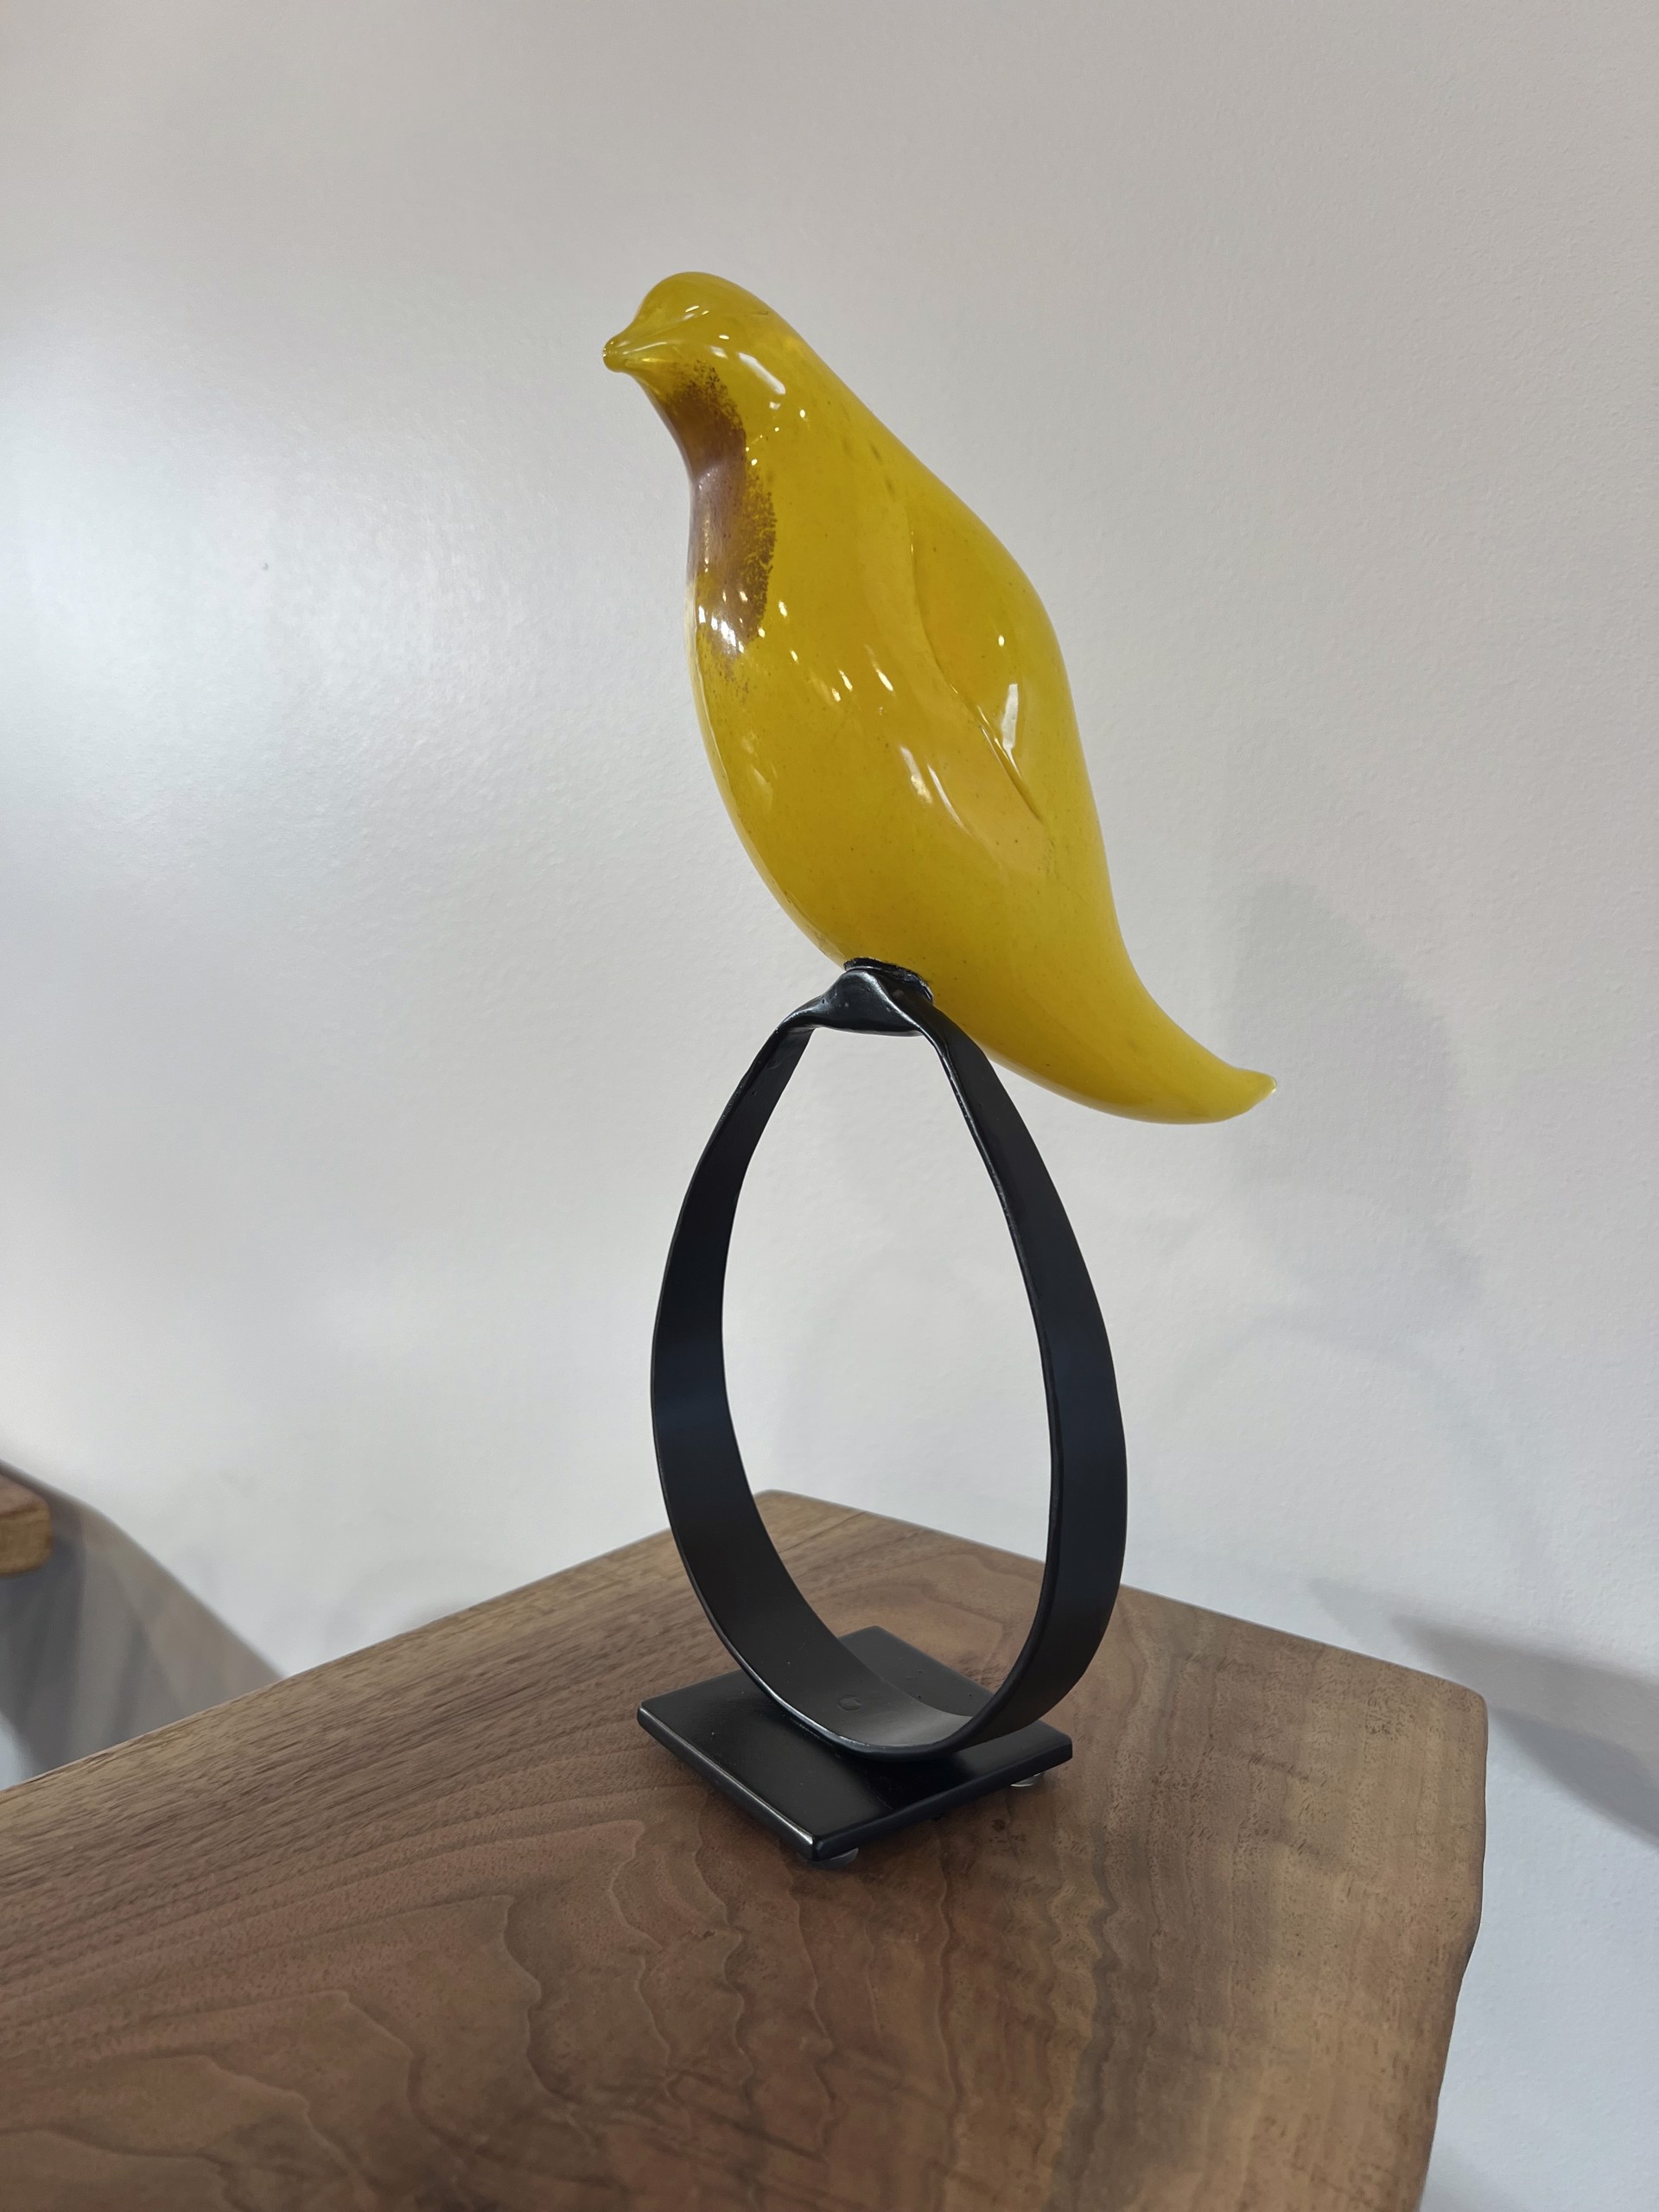 little yellow bird by SAM SPEES